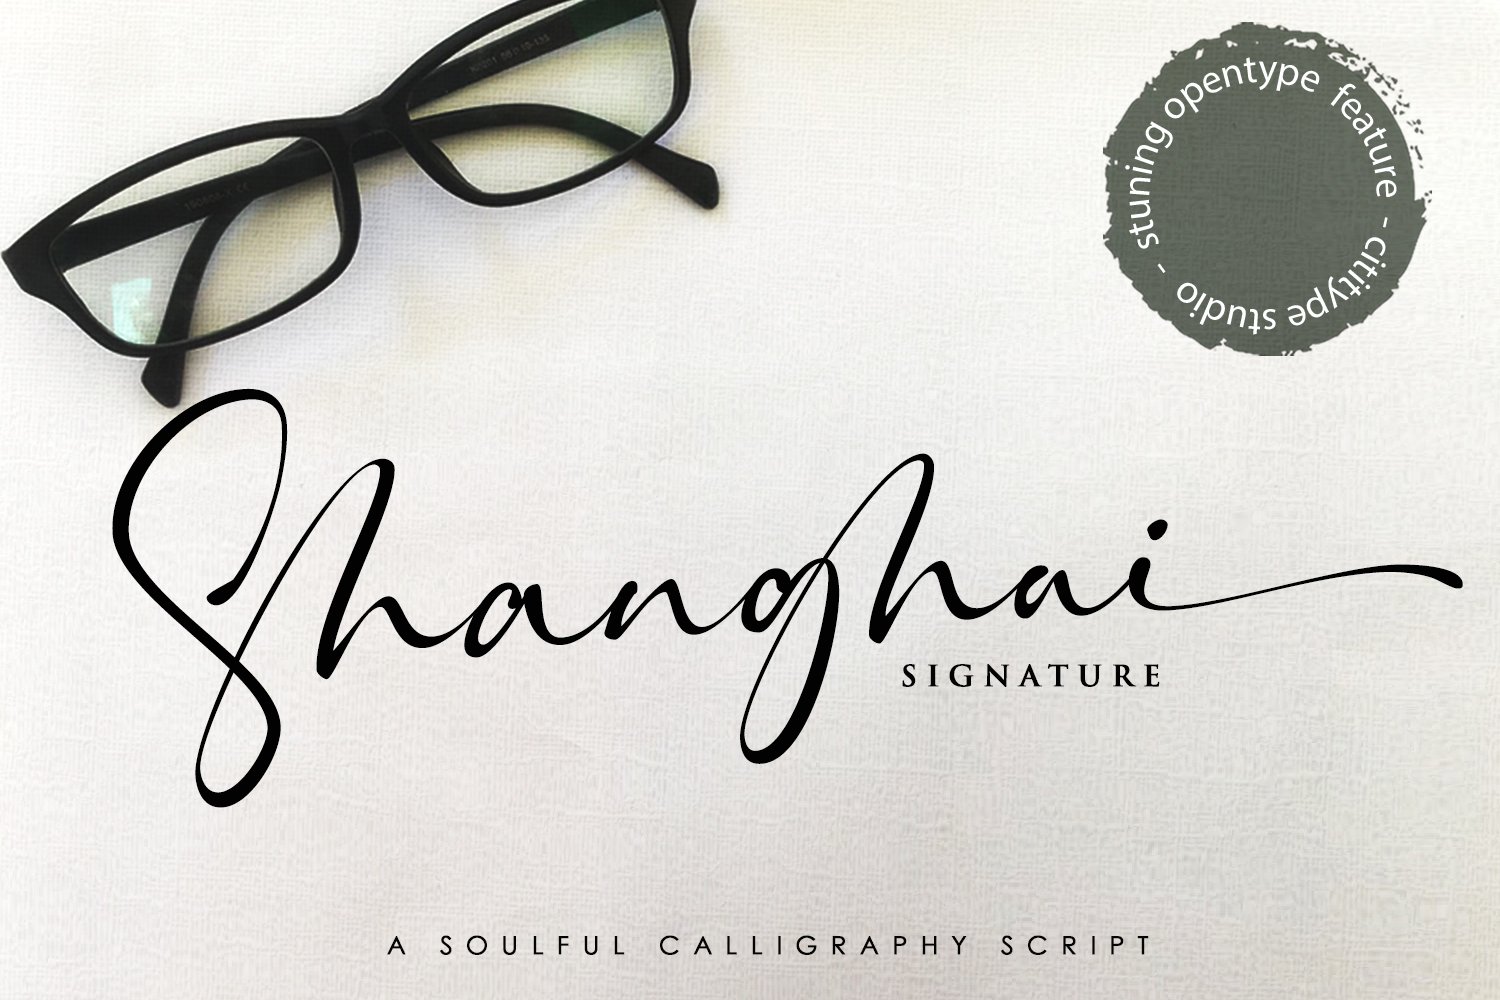 Shanghai Signature - Soulful Calligraphy Script